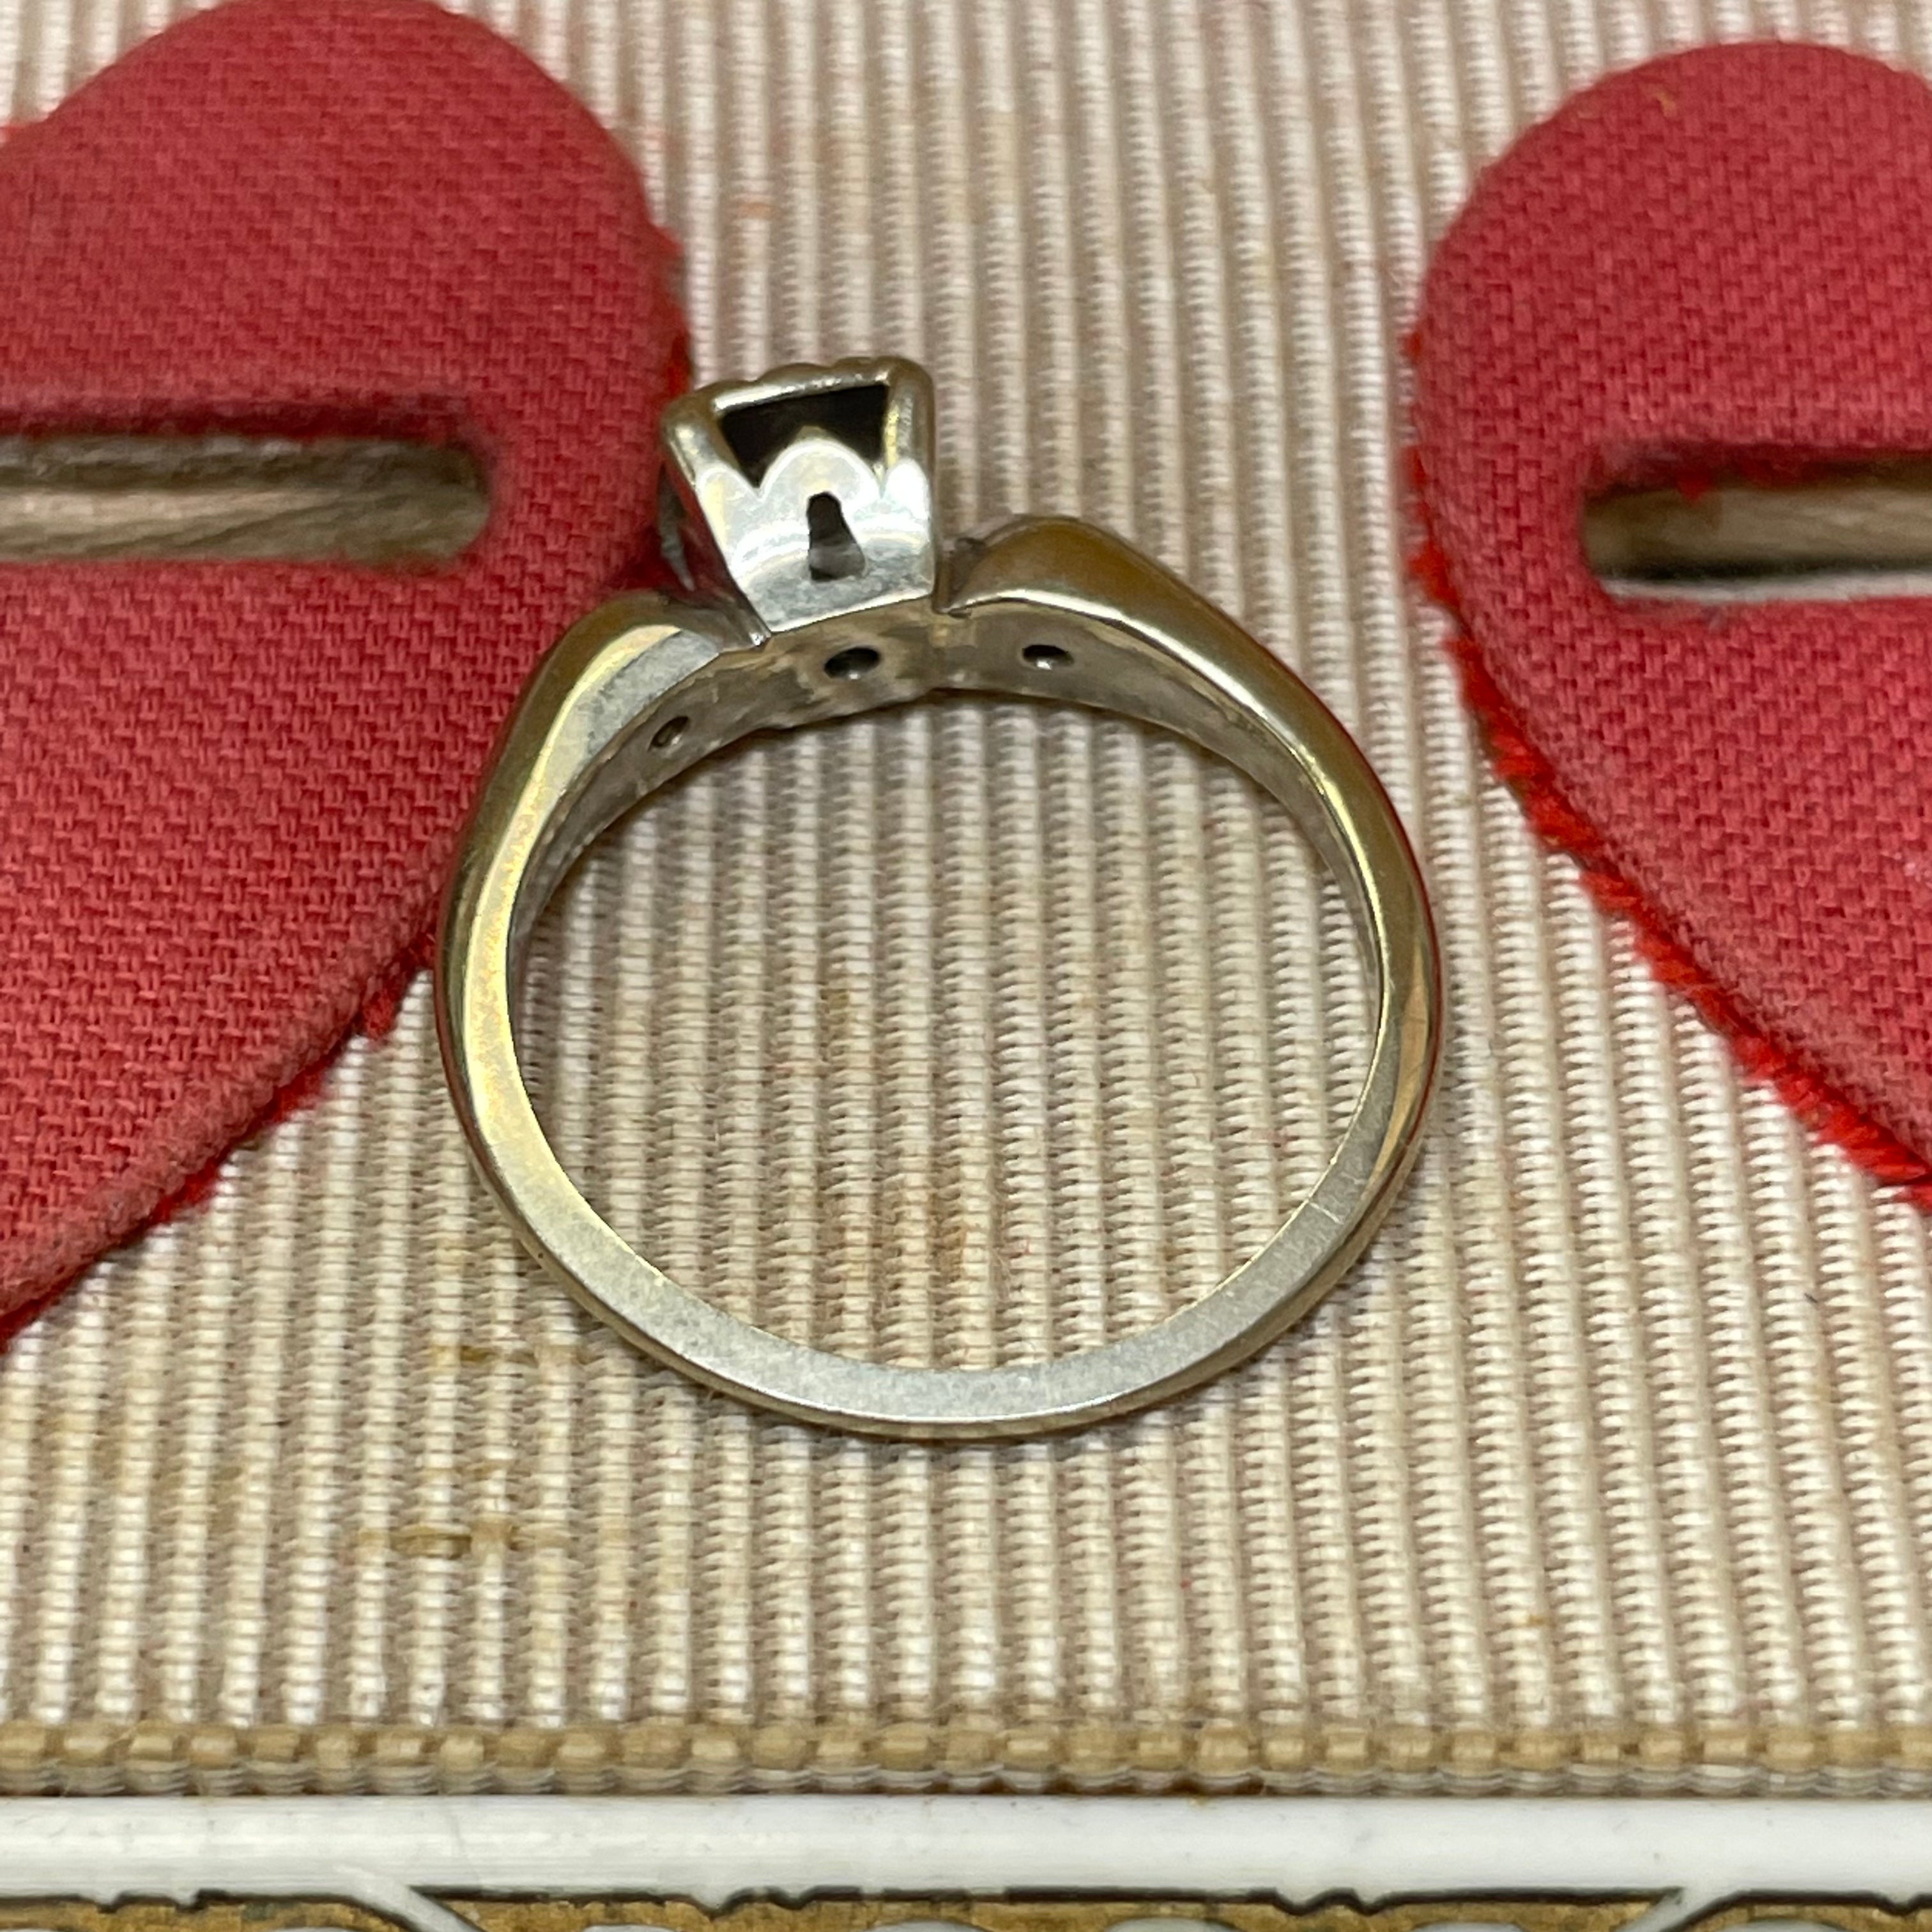 14K White Gold Diamond Vintage Engagement Ring